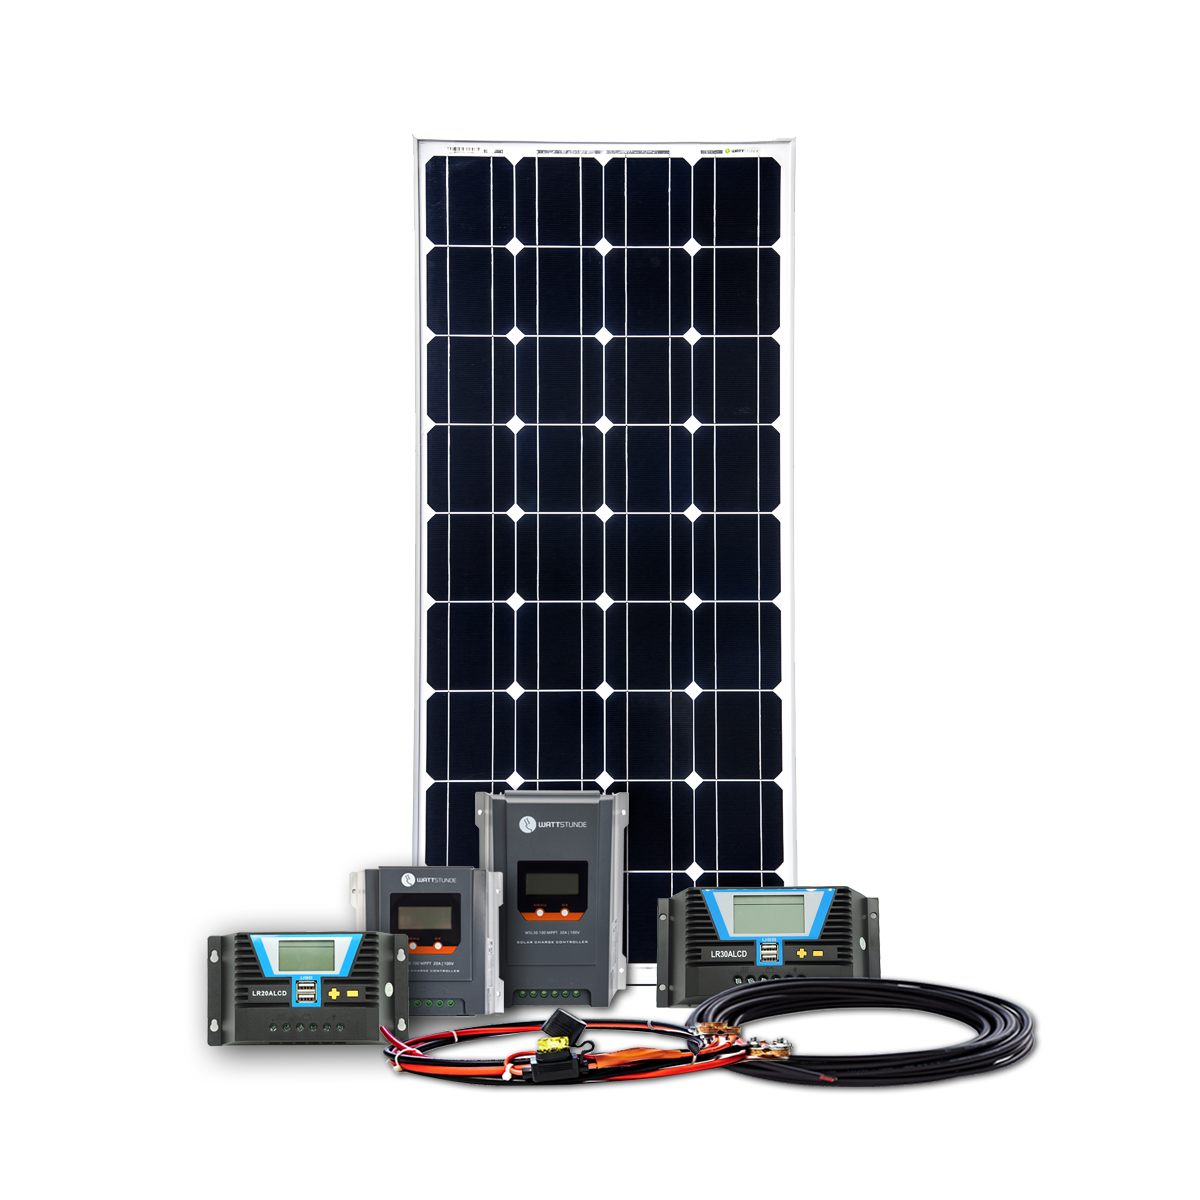 https://solarkontor.de/media/image/product/5712/lg/150w-solar-inselanlage-beginner-bausatz-batterie-laderegler-spannungswandler-auswaehlbar.png